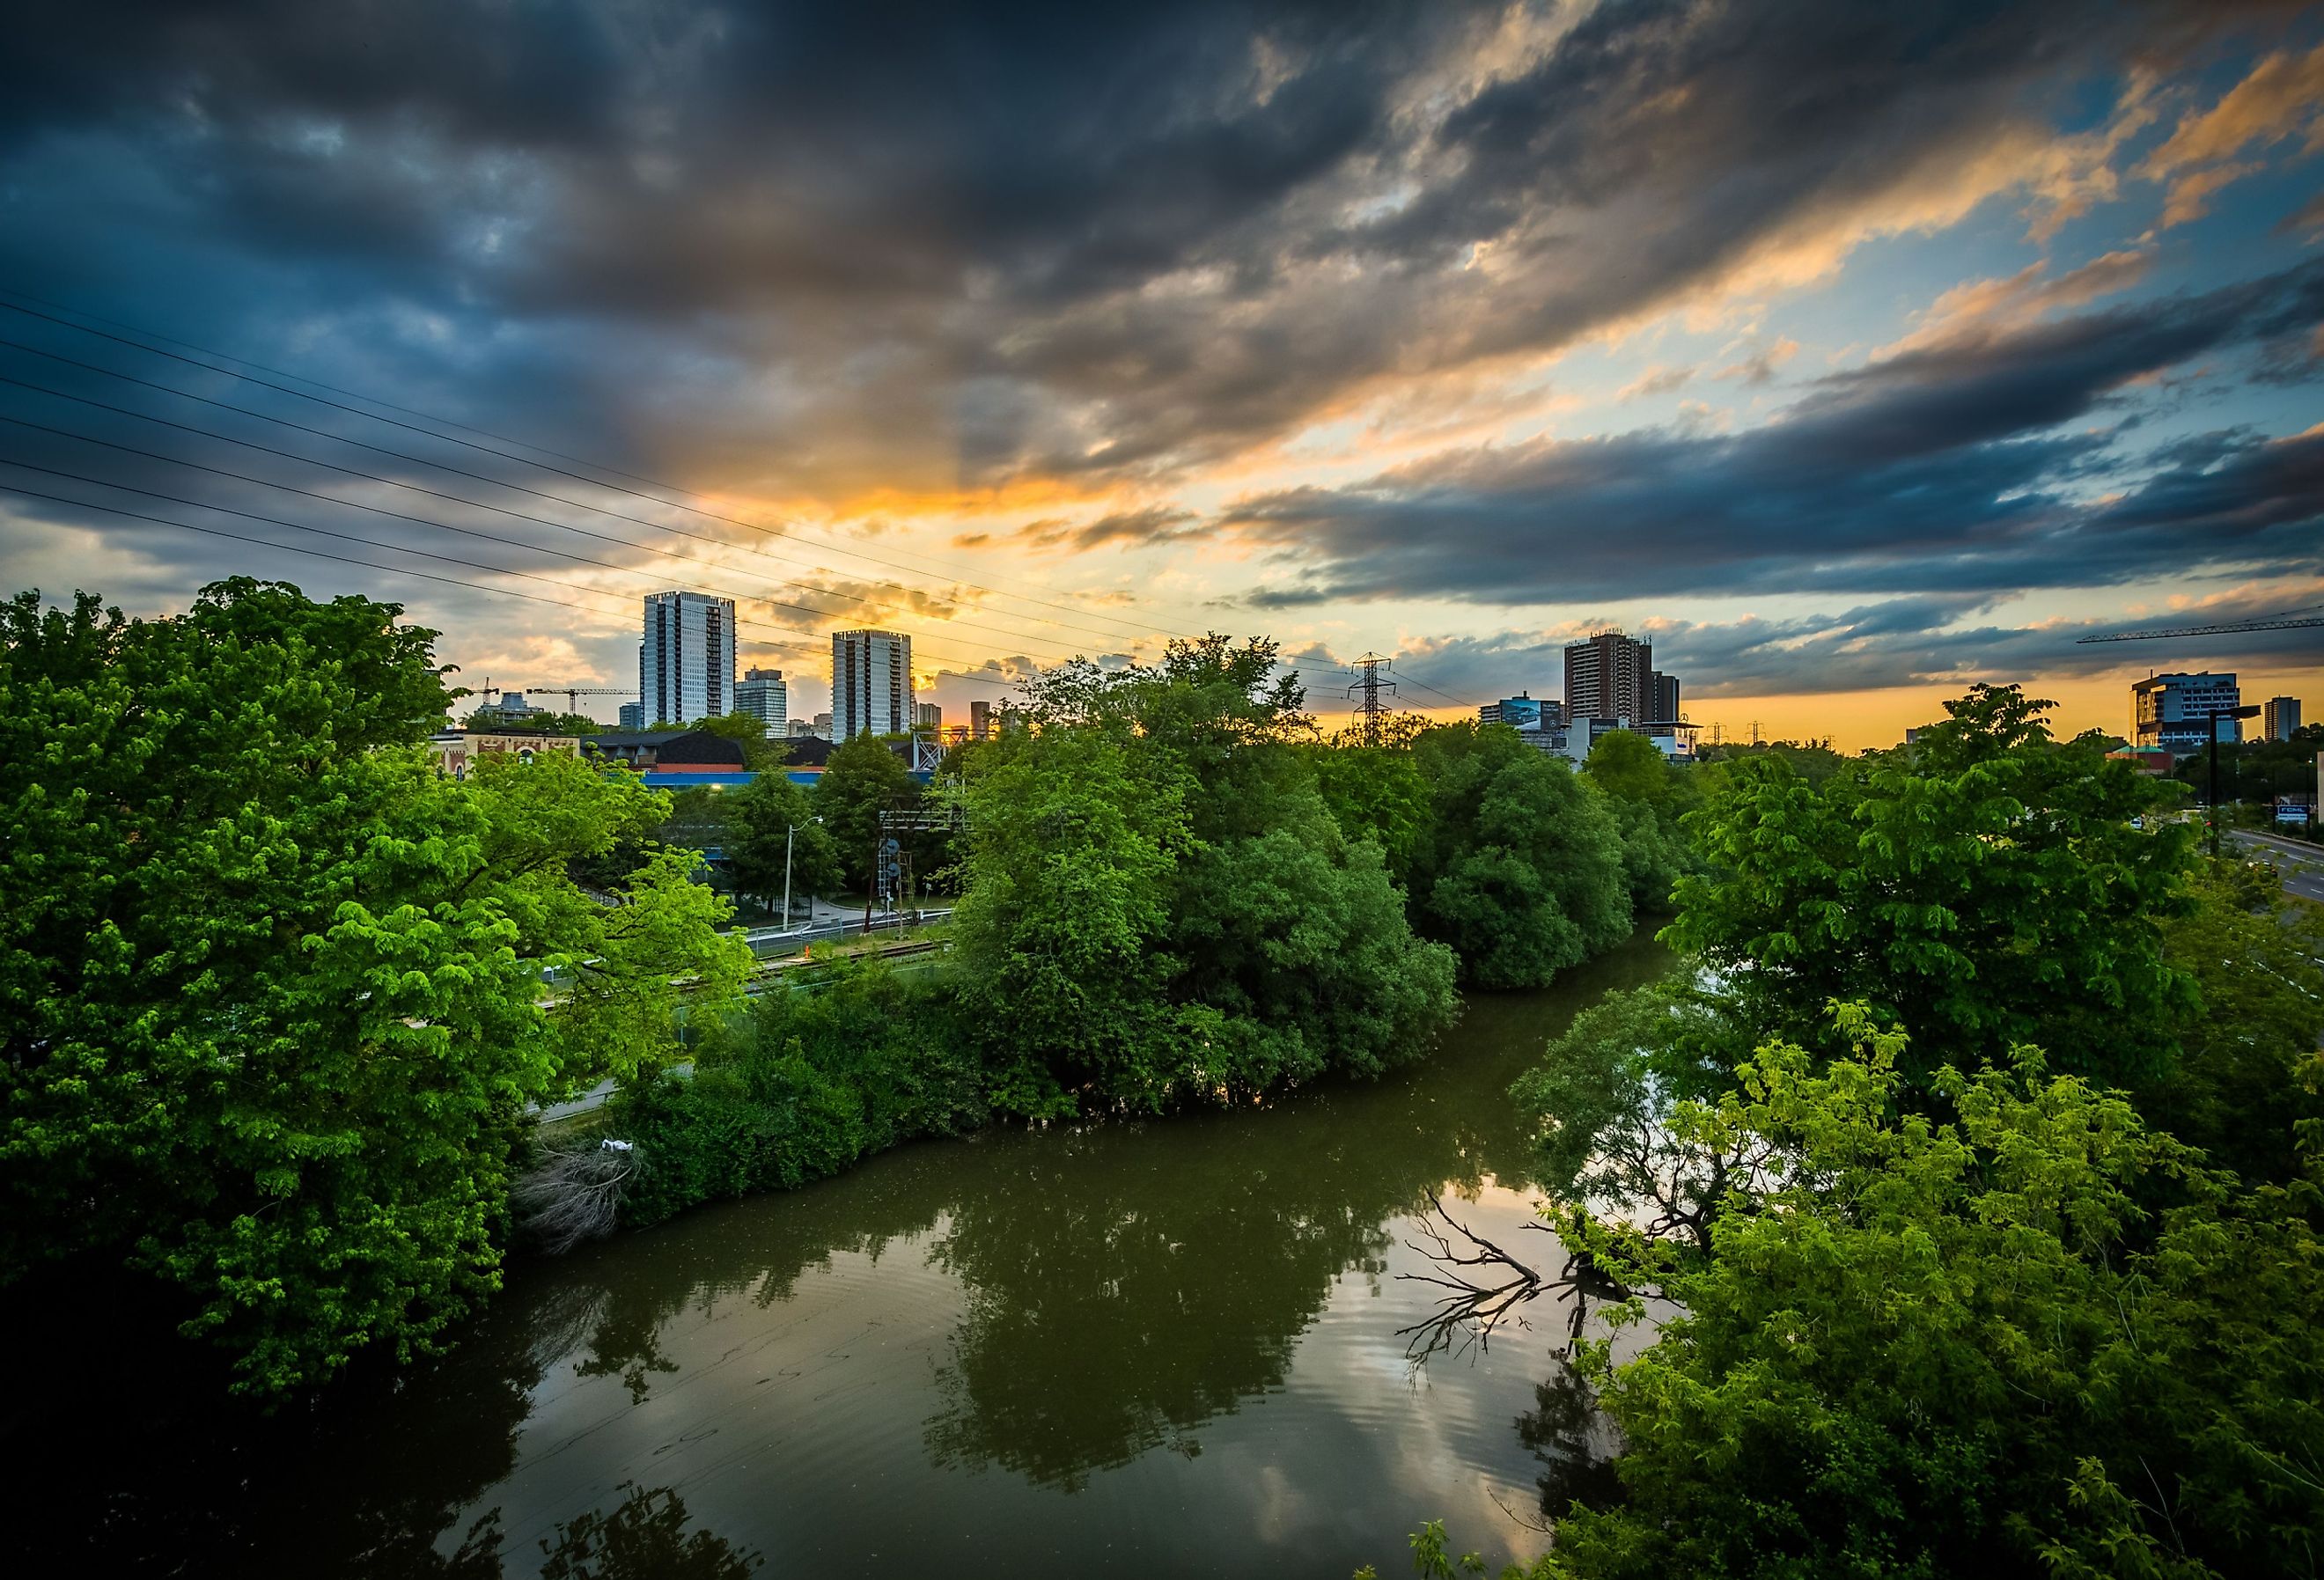 Sunset over the Lower Don River, in Toronto, Ontario. Image credit Jon Bilous via Shutterstock.